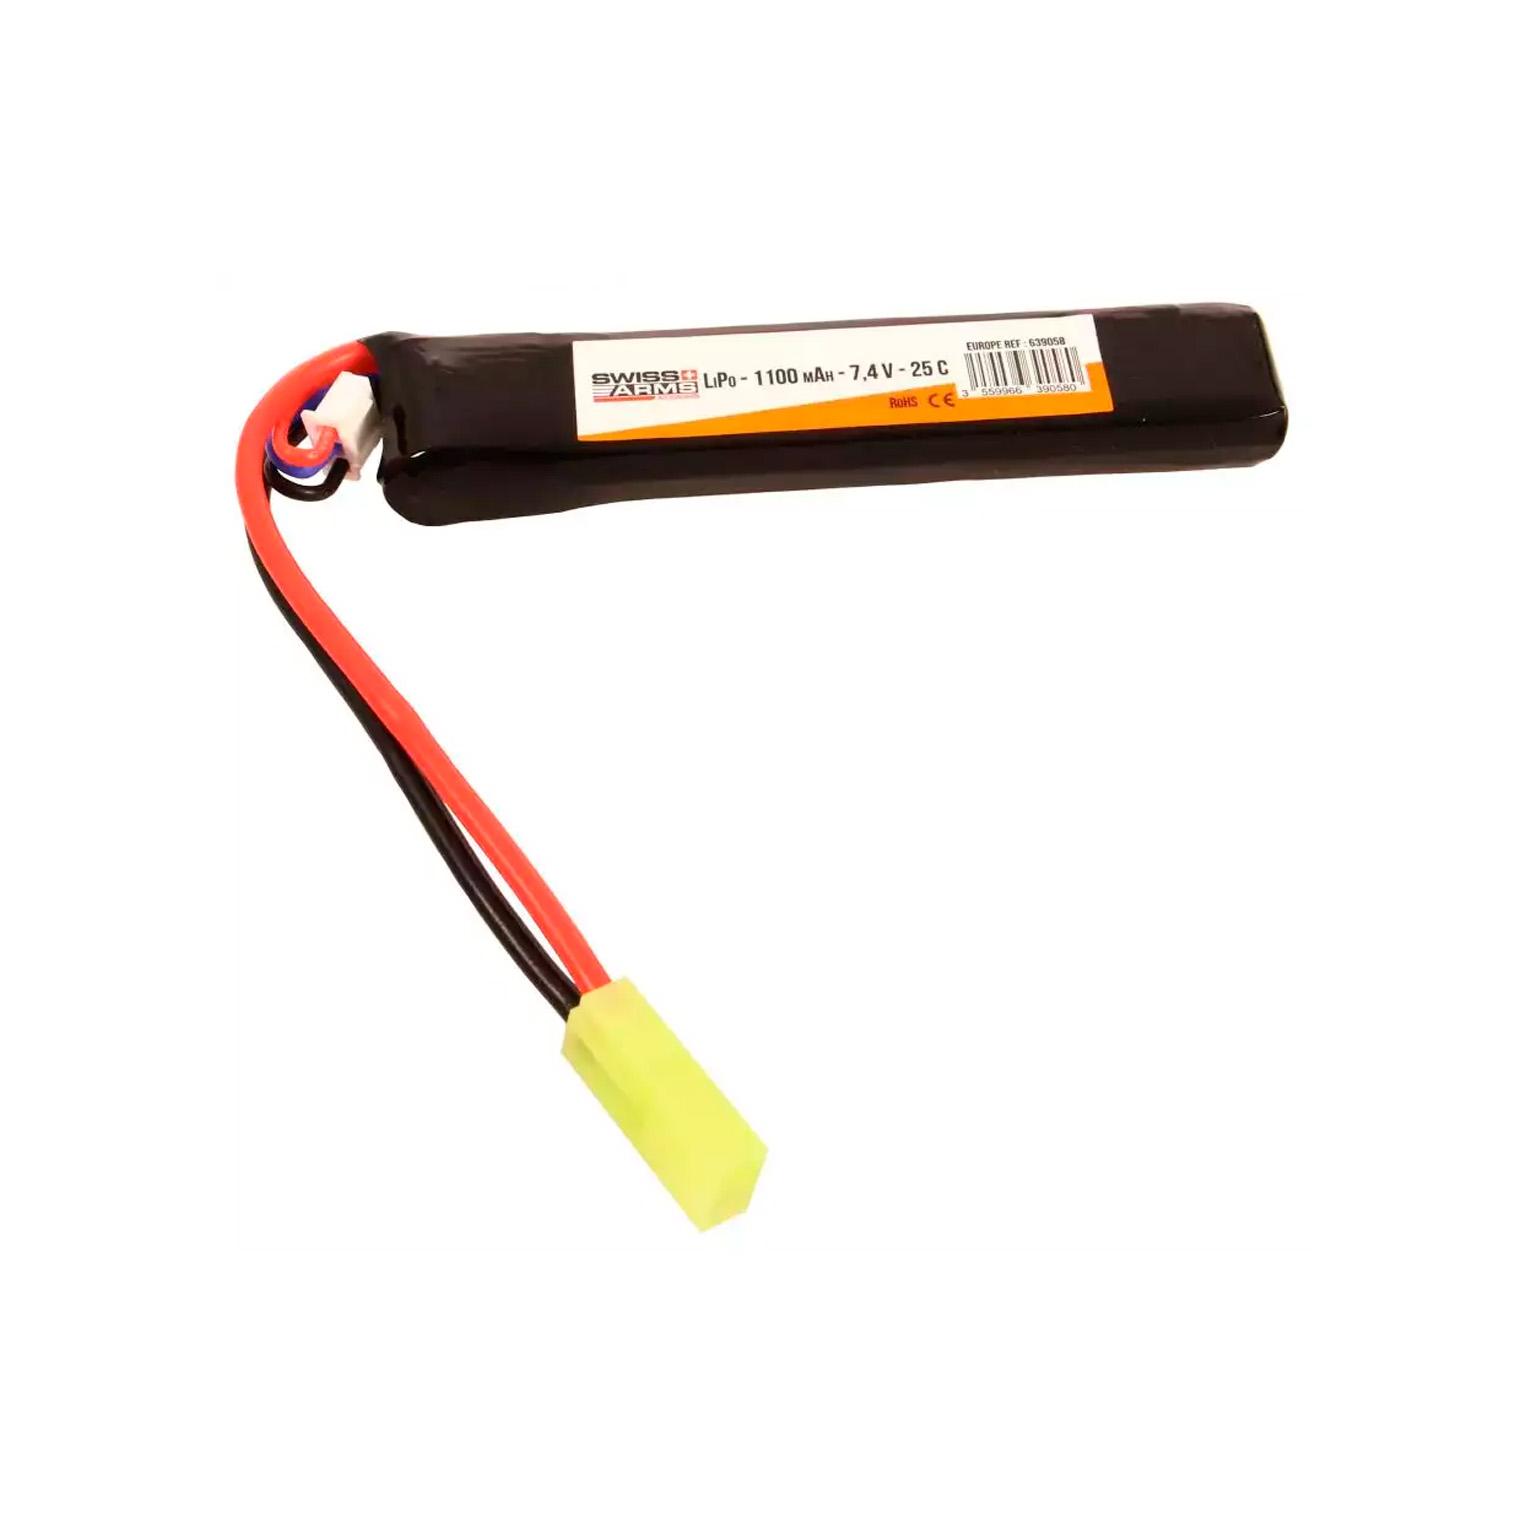 Battery Stick SWISS ARMS LIPo 7.4V 1100mAh Mini Tamiya 25C